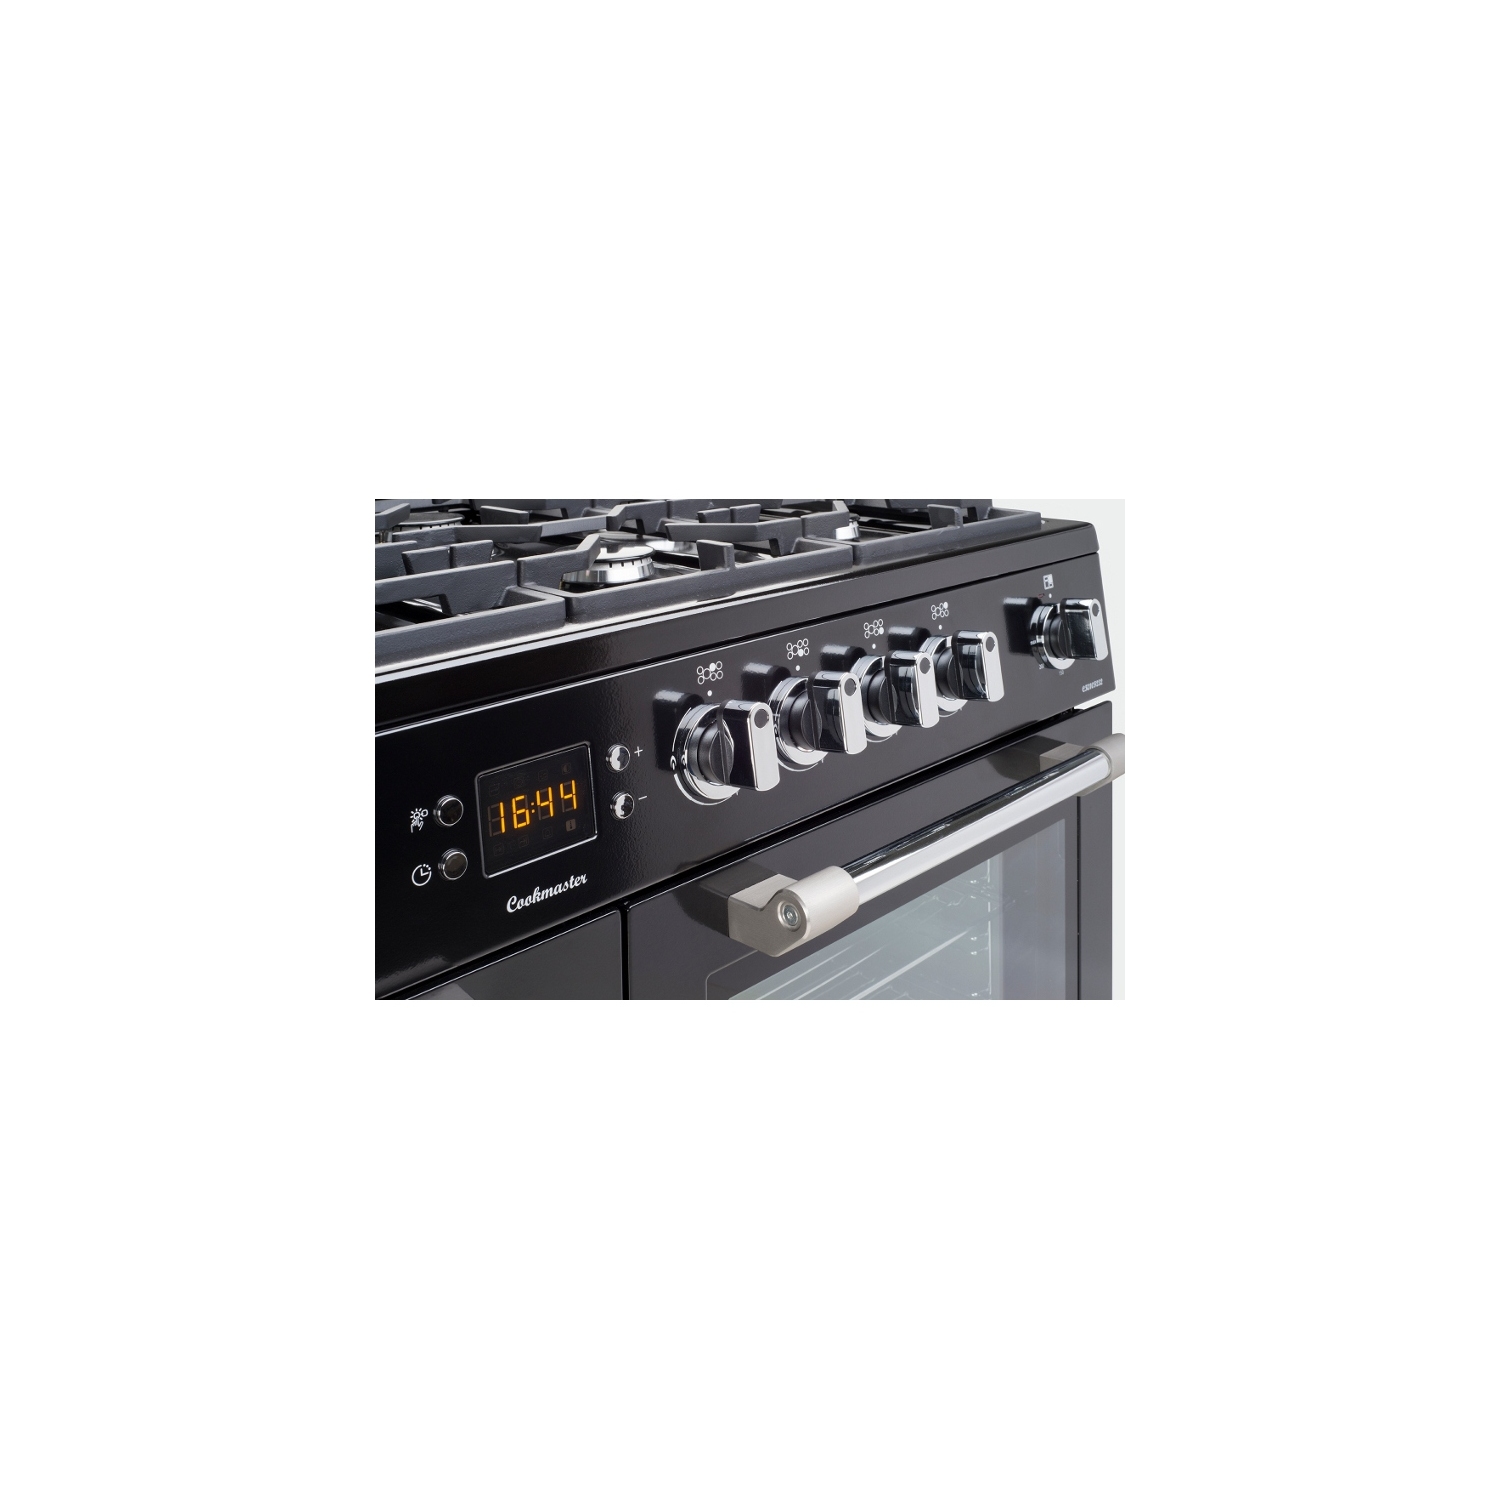 Leisure Cookmaster CK110F232K 110cm Dual Fuel Range Cooker - 3